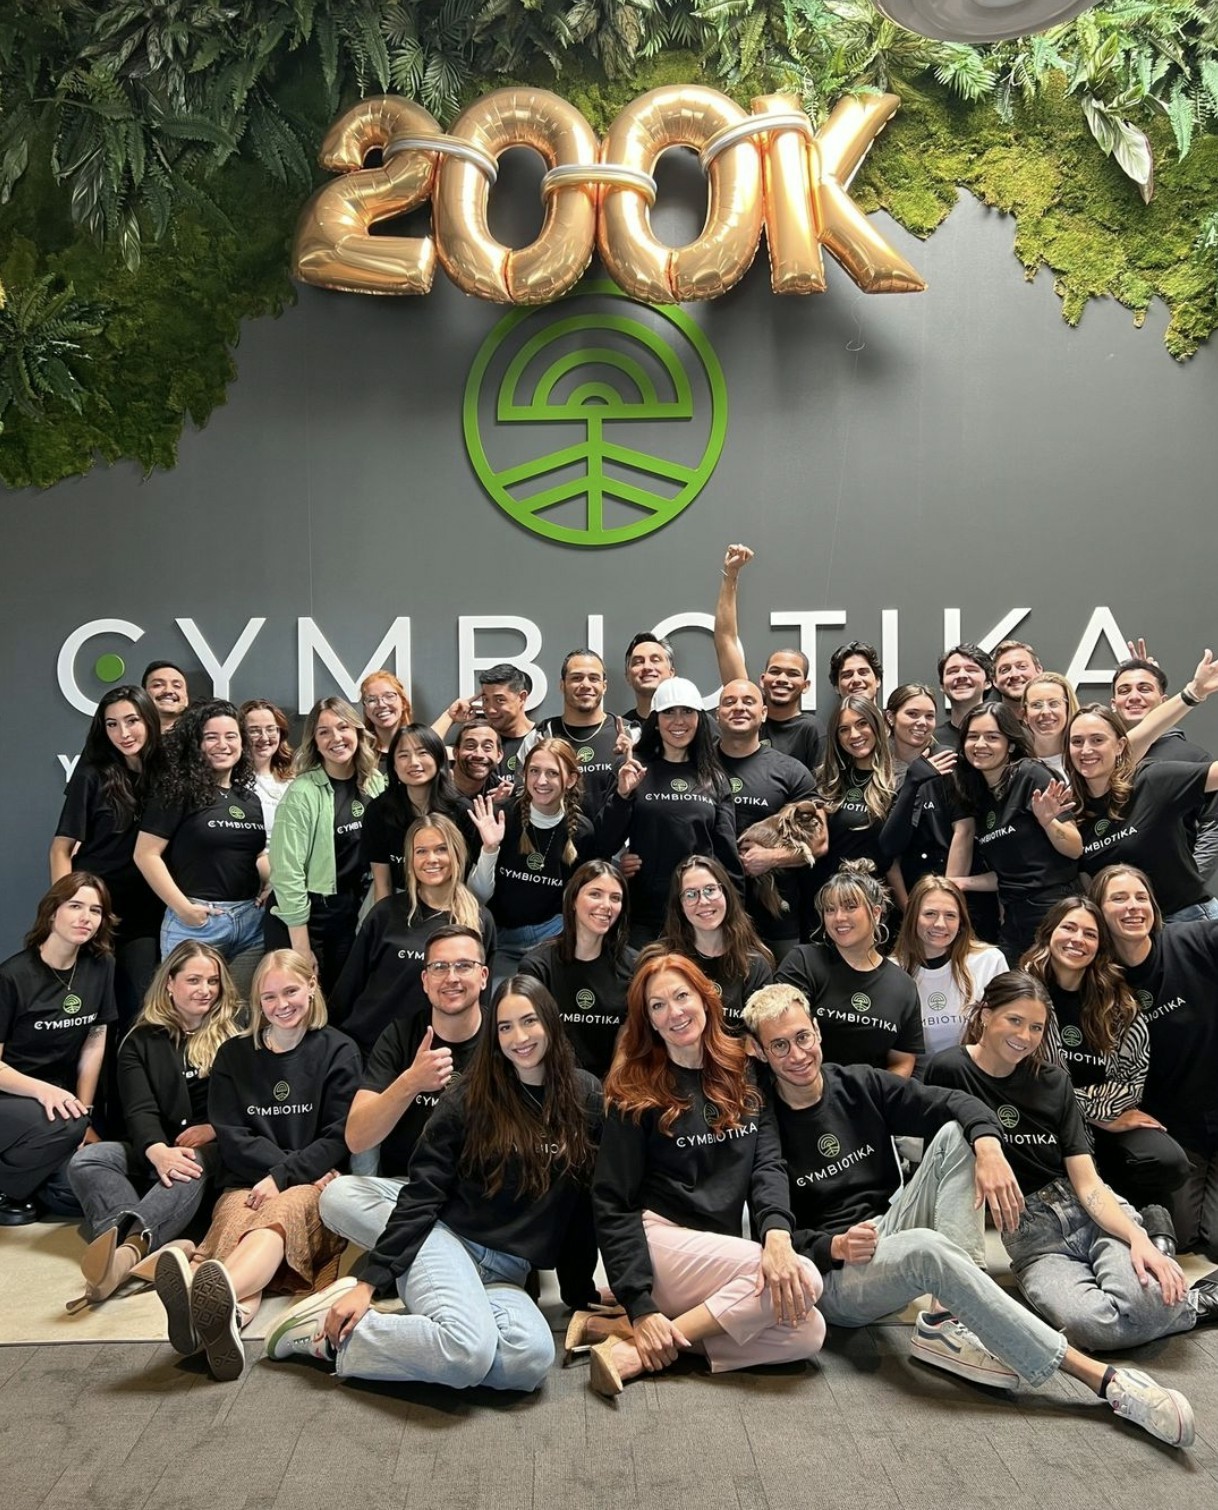 Cymbiotika employees hitting 200k on Instagram. 